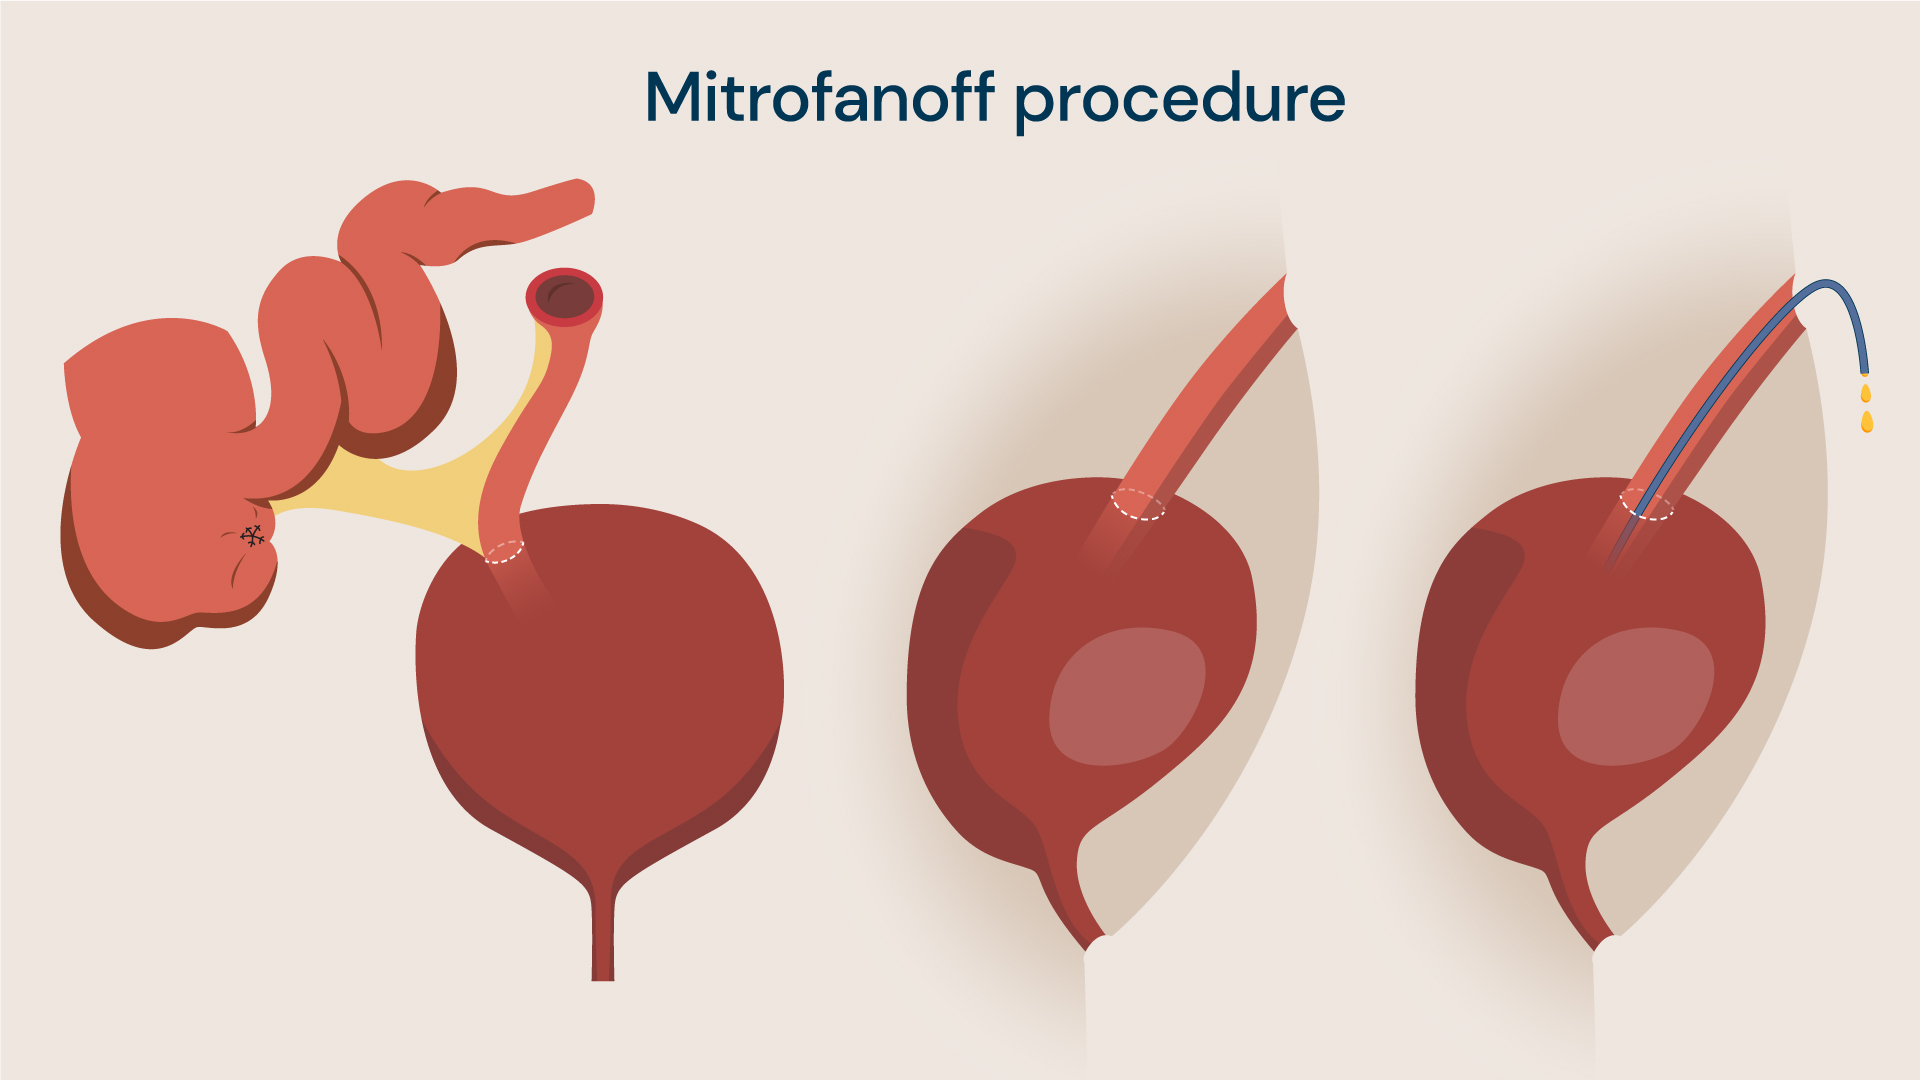 Mitrofanoff procedure treats children who struggle to drain their bladders in the normal way